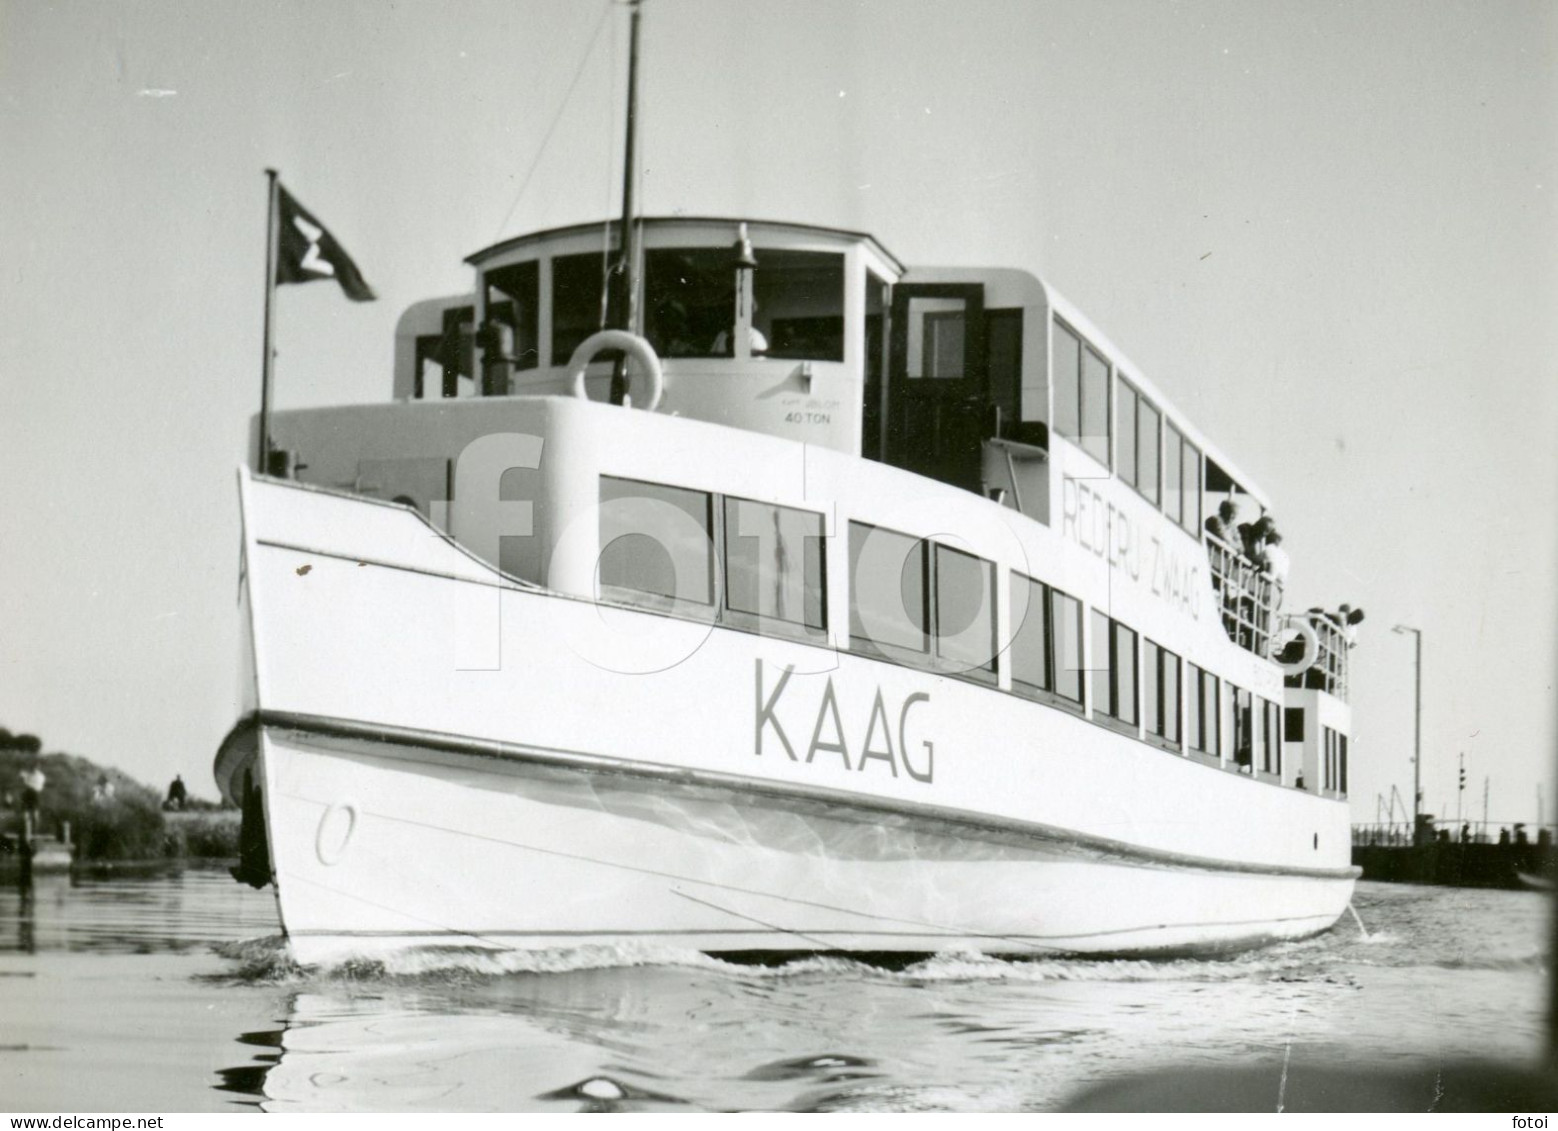 1949 REAL AMATEUR PHOTO FOTO KAAG BOAT AMSTERDAM NETHERLAND HOLLAND NETHERLANDS AT117 - Boats